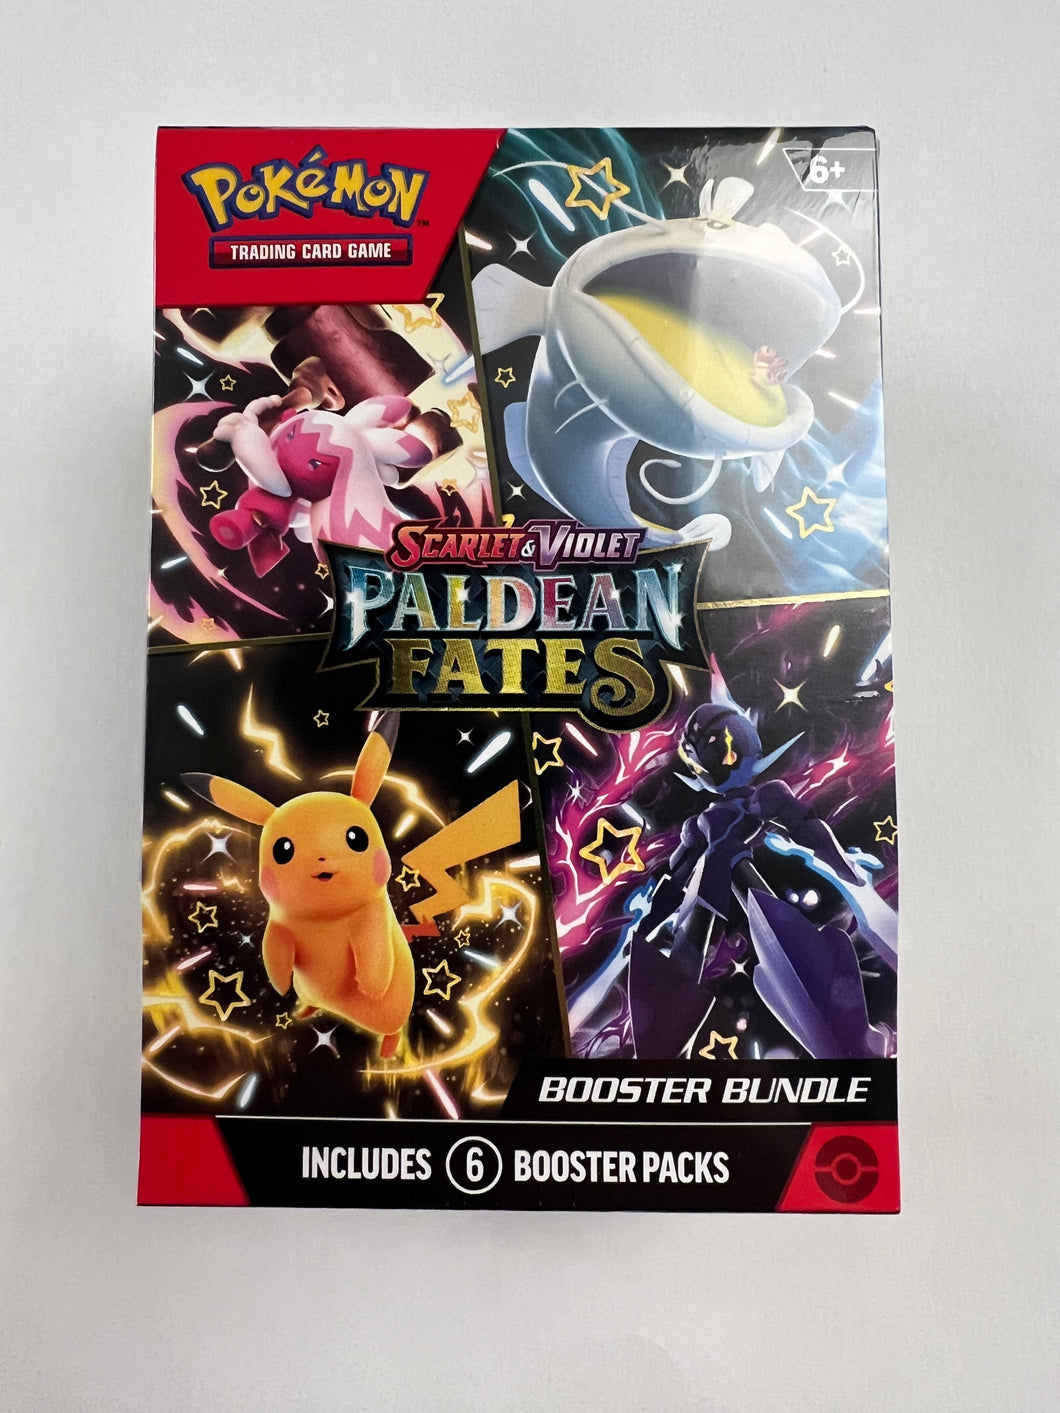 Pokémon Paldean Fates Booster Bundle